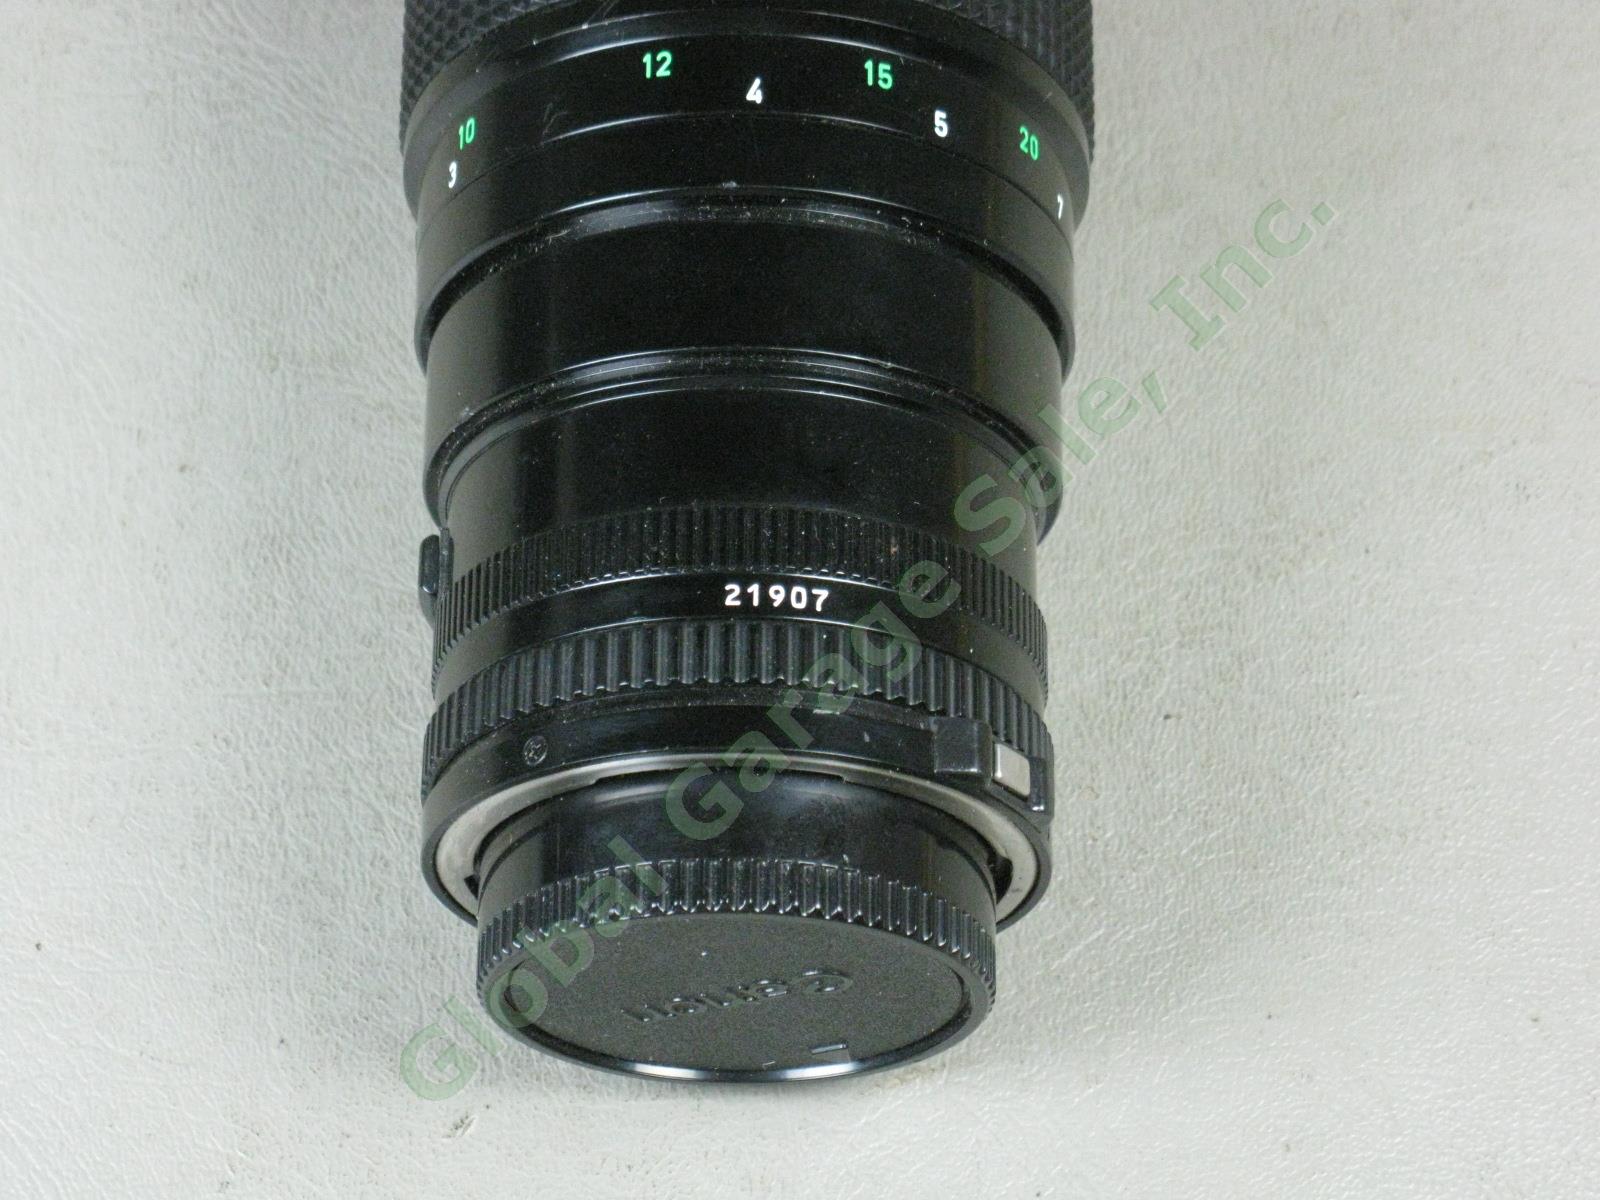 Canon FD 300mm 1:4 f/4 Telephoto Camera Lens 21907 Exc Condition No Reserve! 2